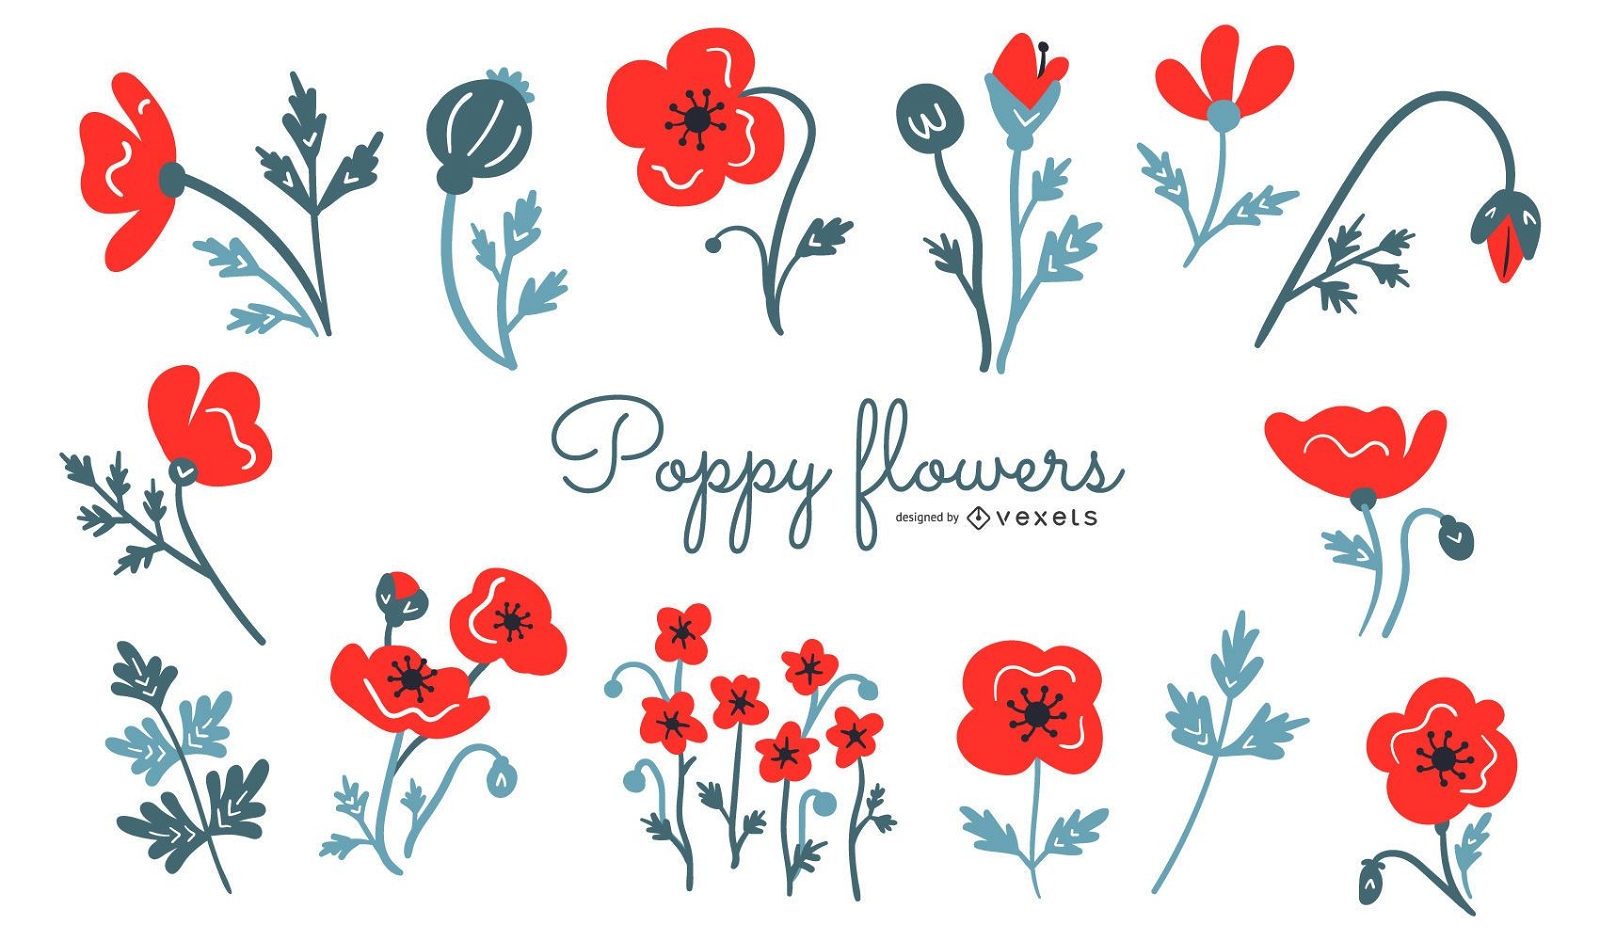 Poppy flowers illustration set